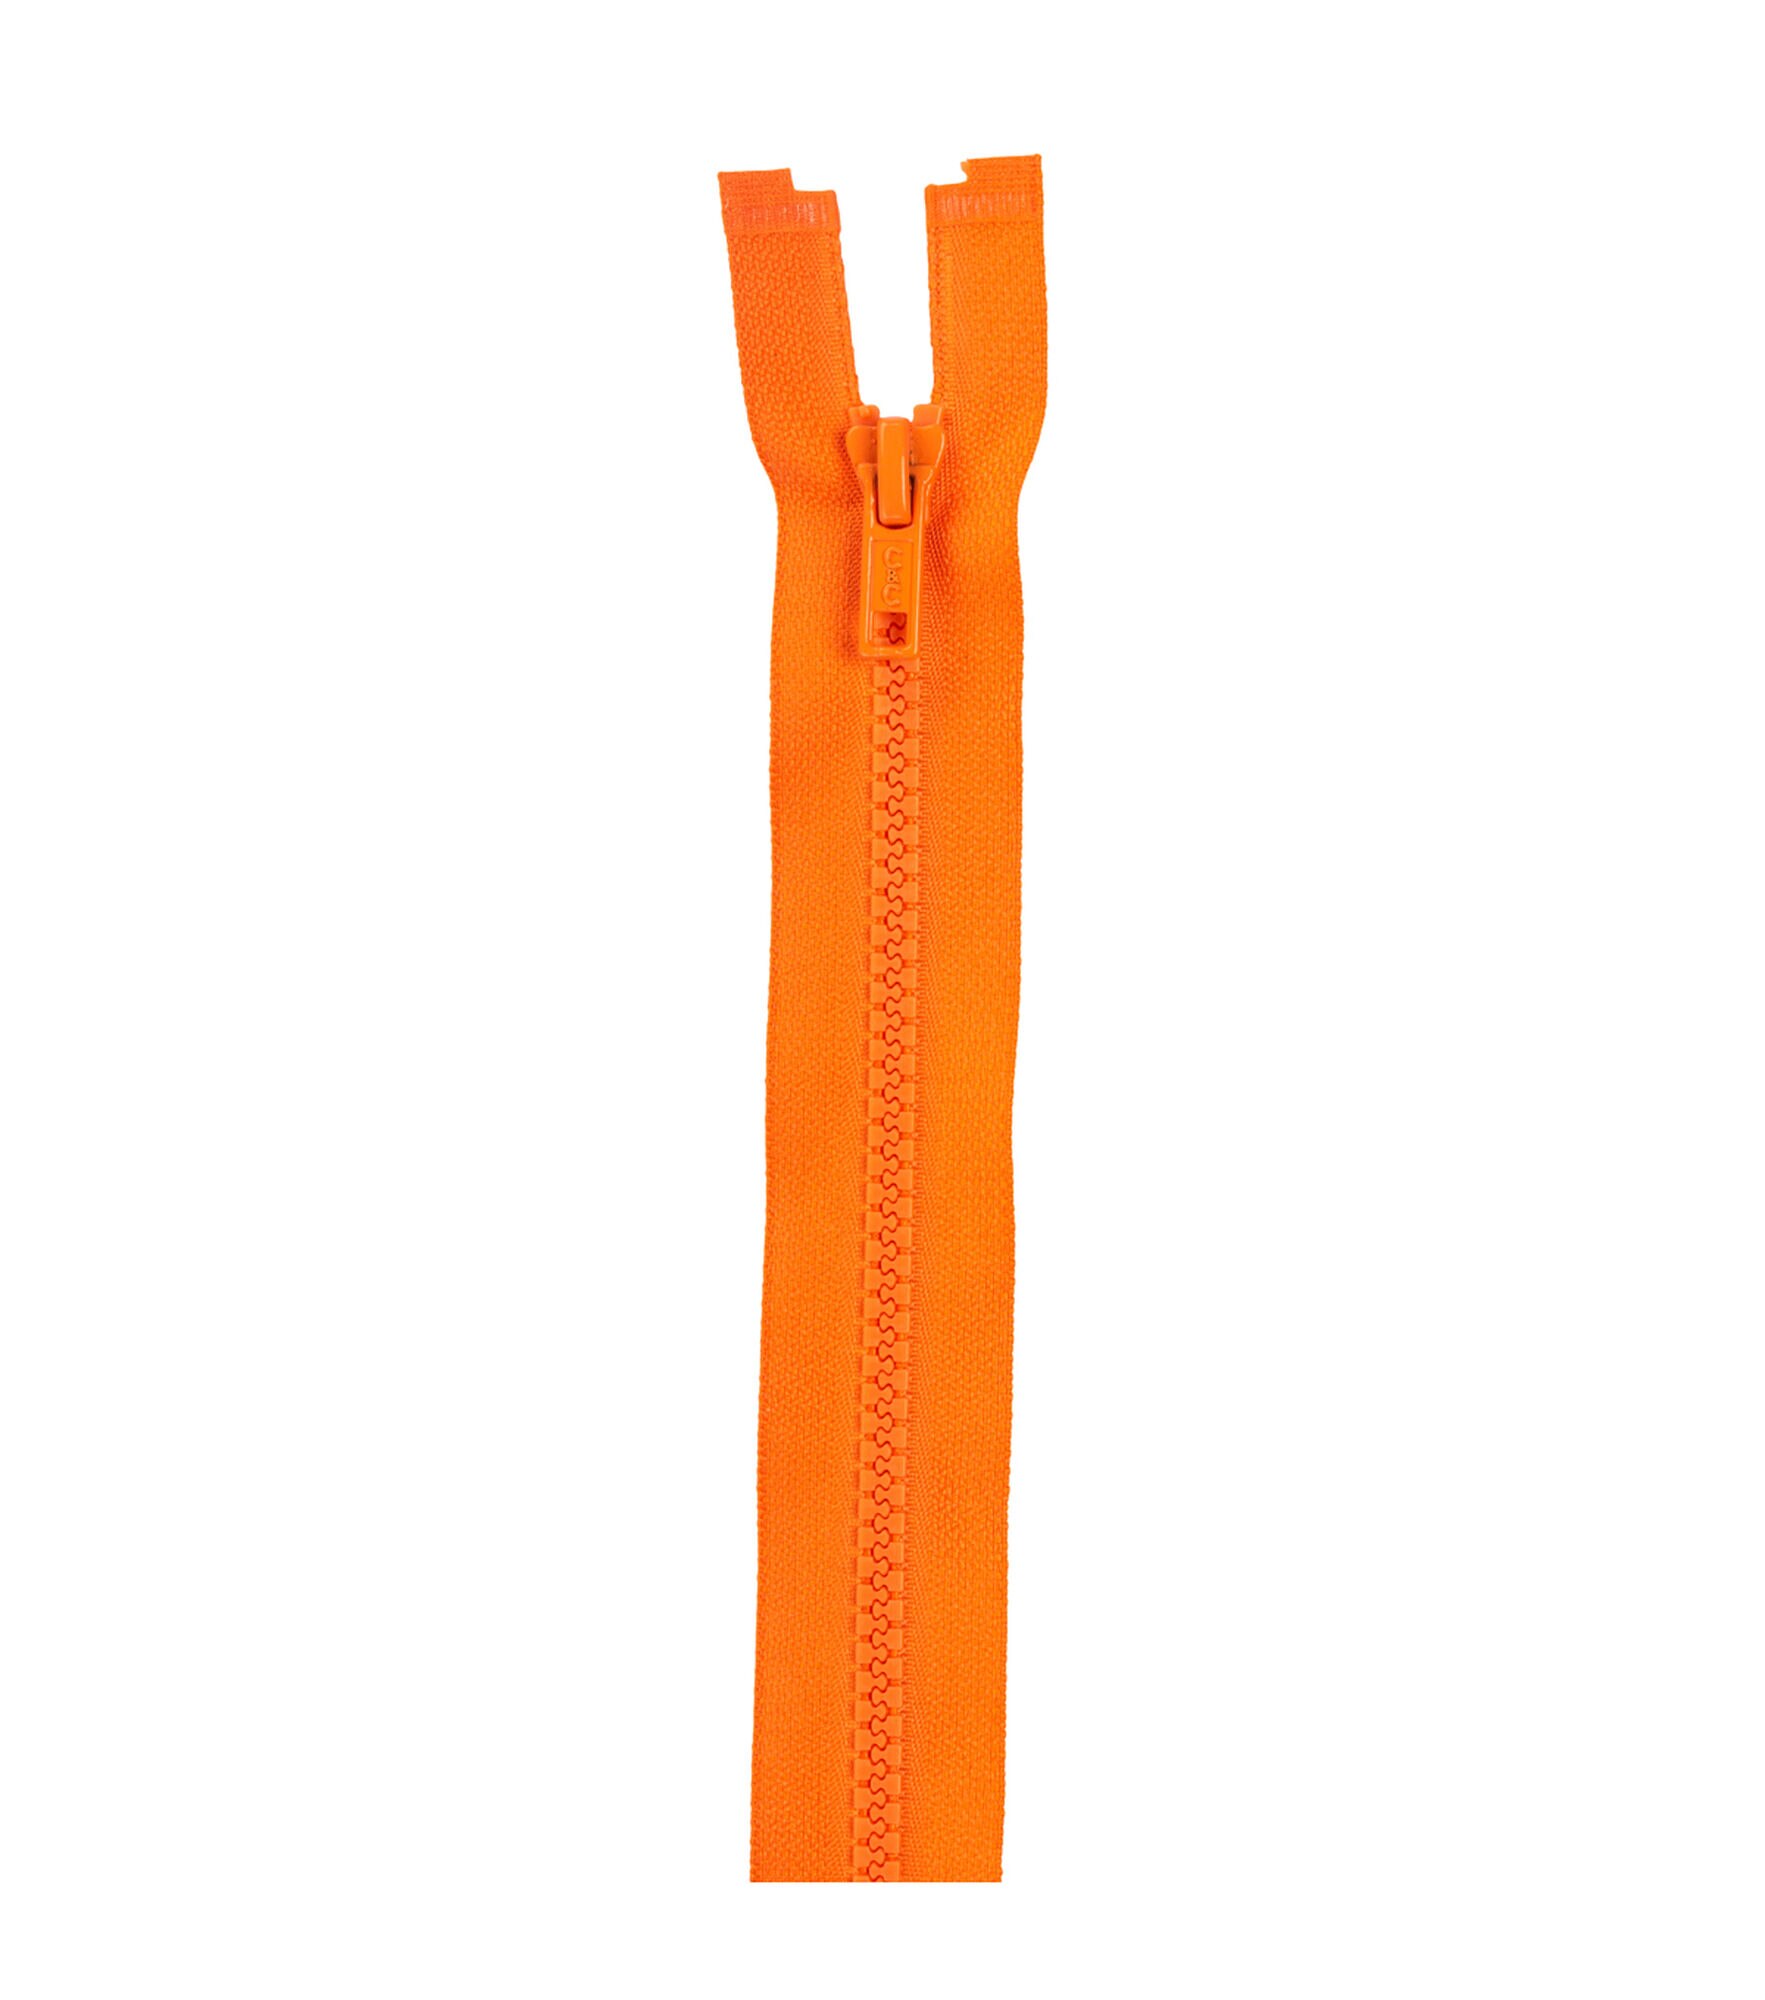 Coats & Clark 30'' Molded Separating Sport Zipper, Tangerine, hi-res